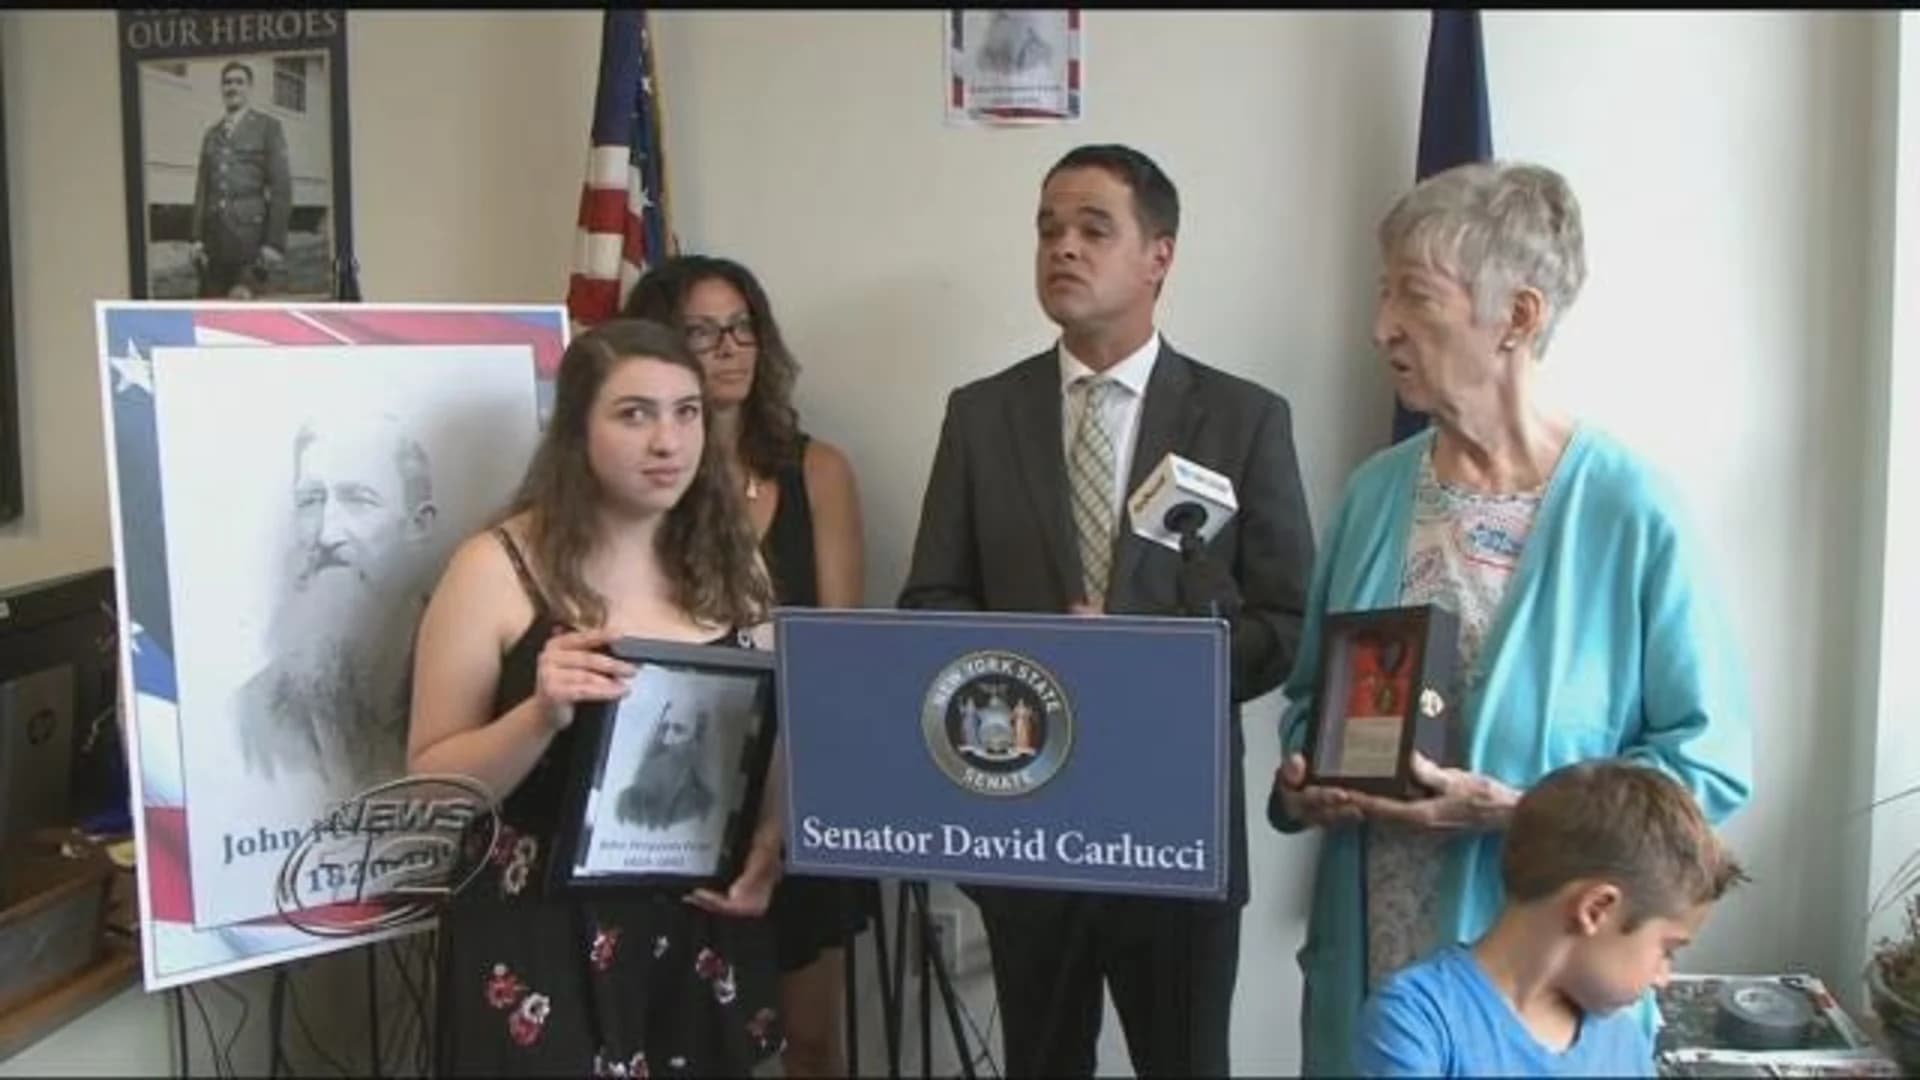 Family of Civil War veteran reunited with lost medal